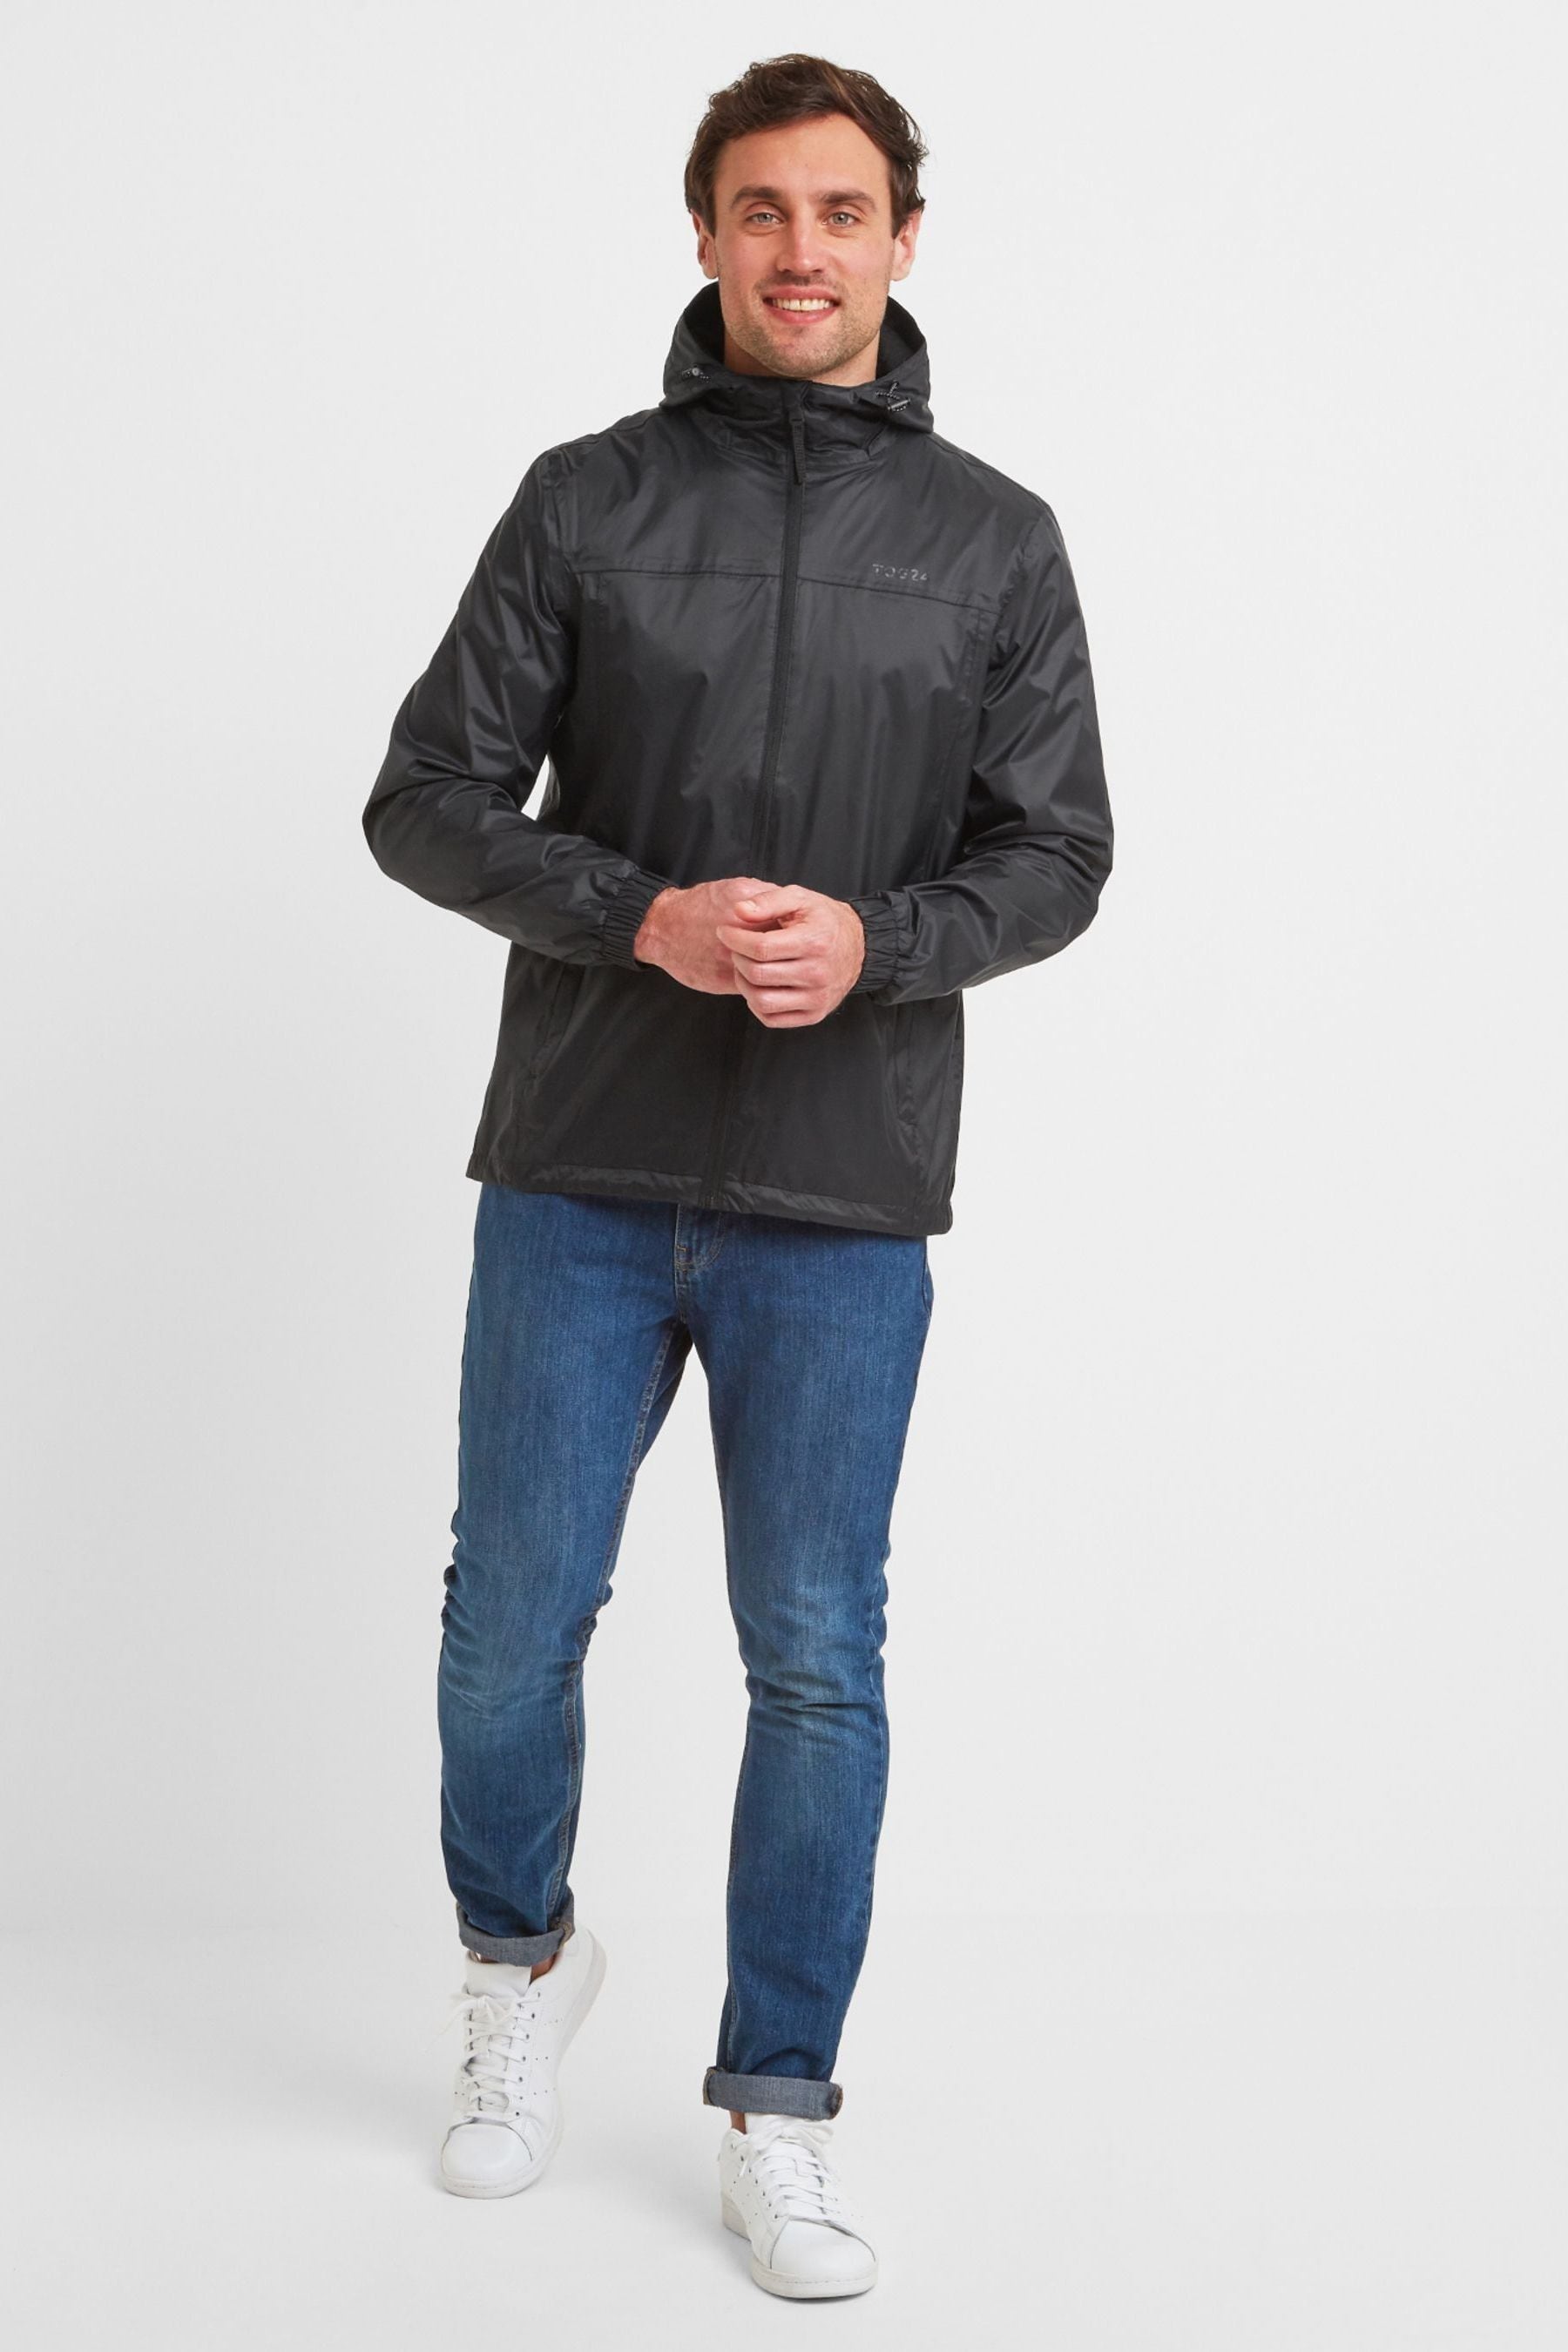 Buy Tog 24 Navy Blue Craven Jacket from the Next UK online shop